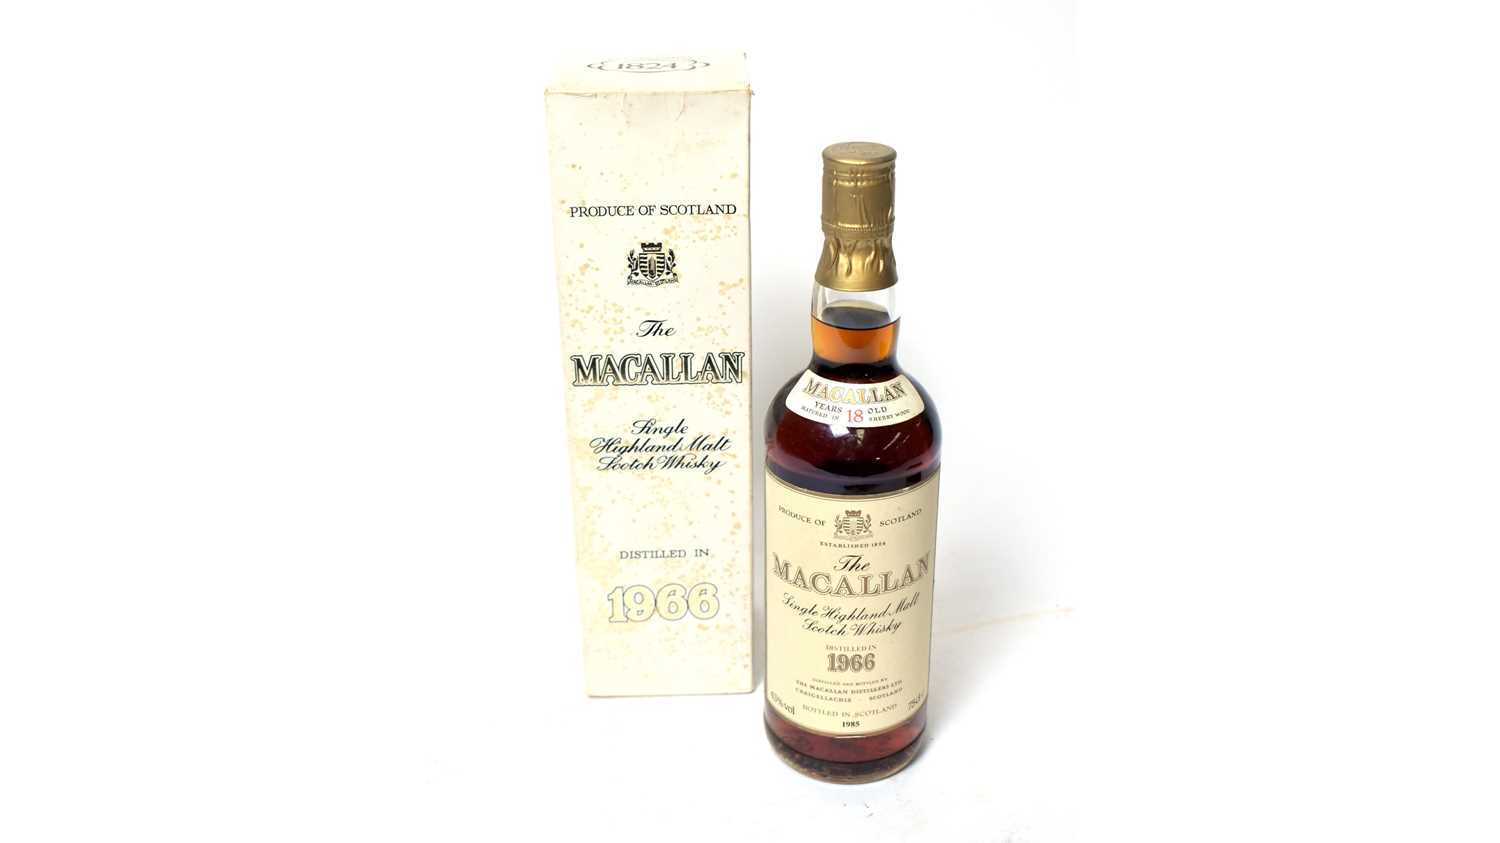 631 - The Macallan Single Highland Malt Scotch Whisky 1966 18 years old 